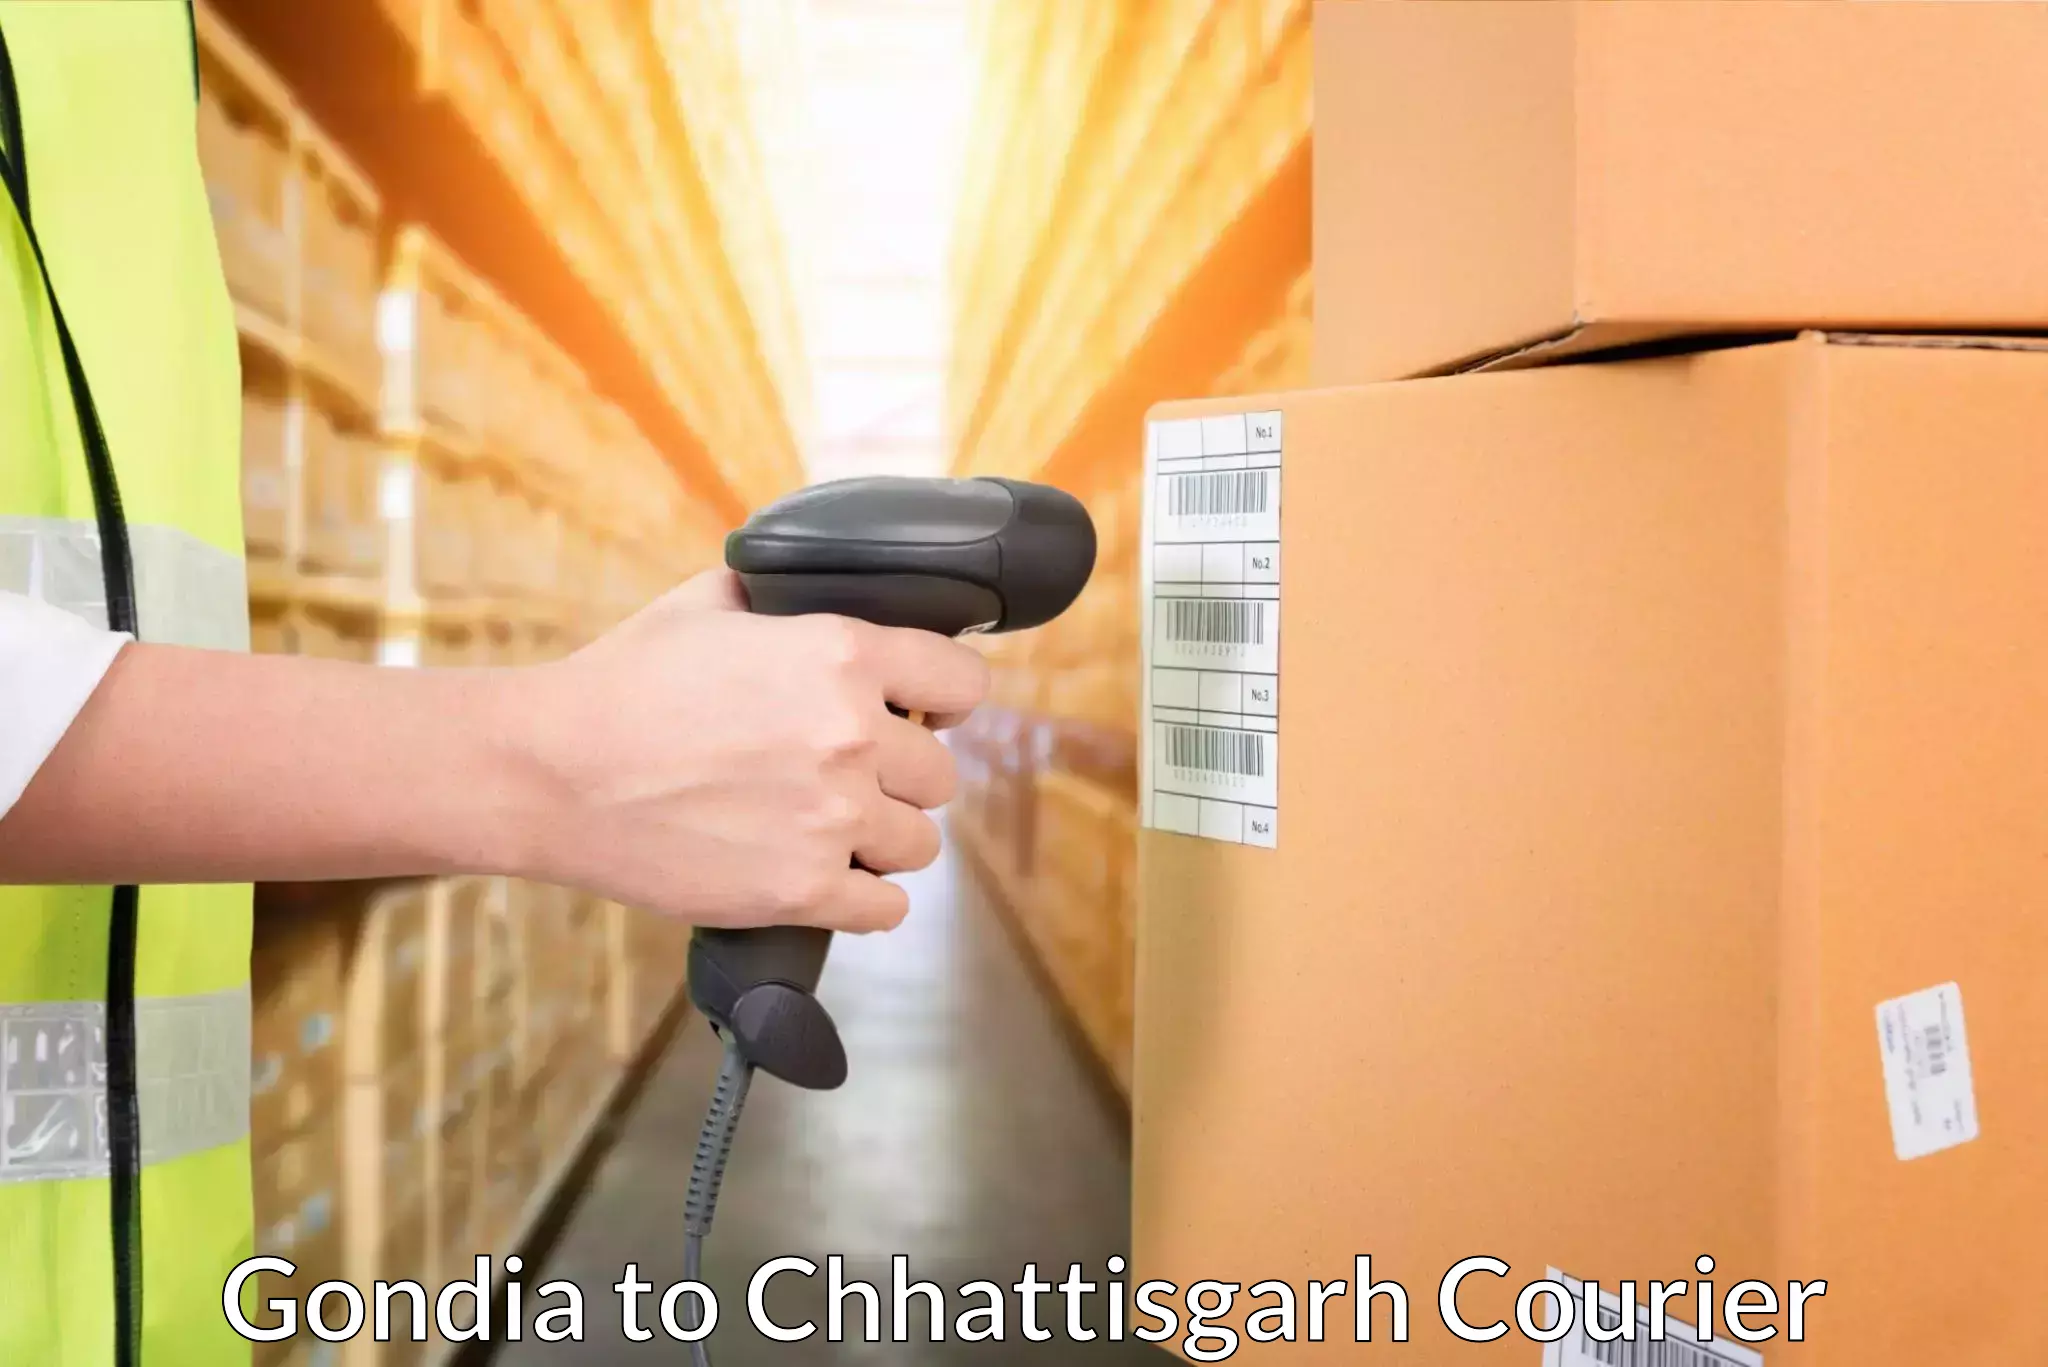 Modern courier technology Gondia to Bastar